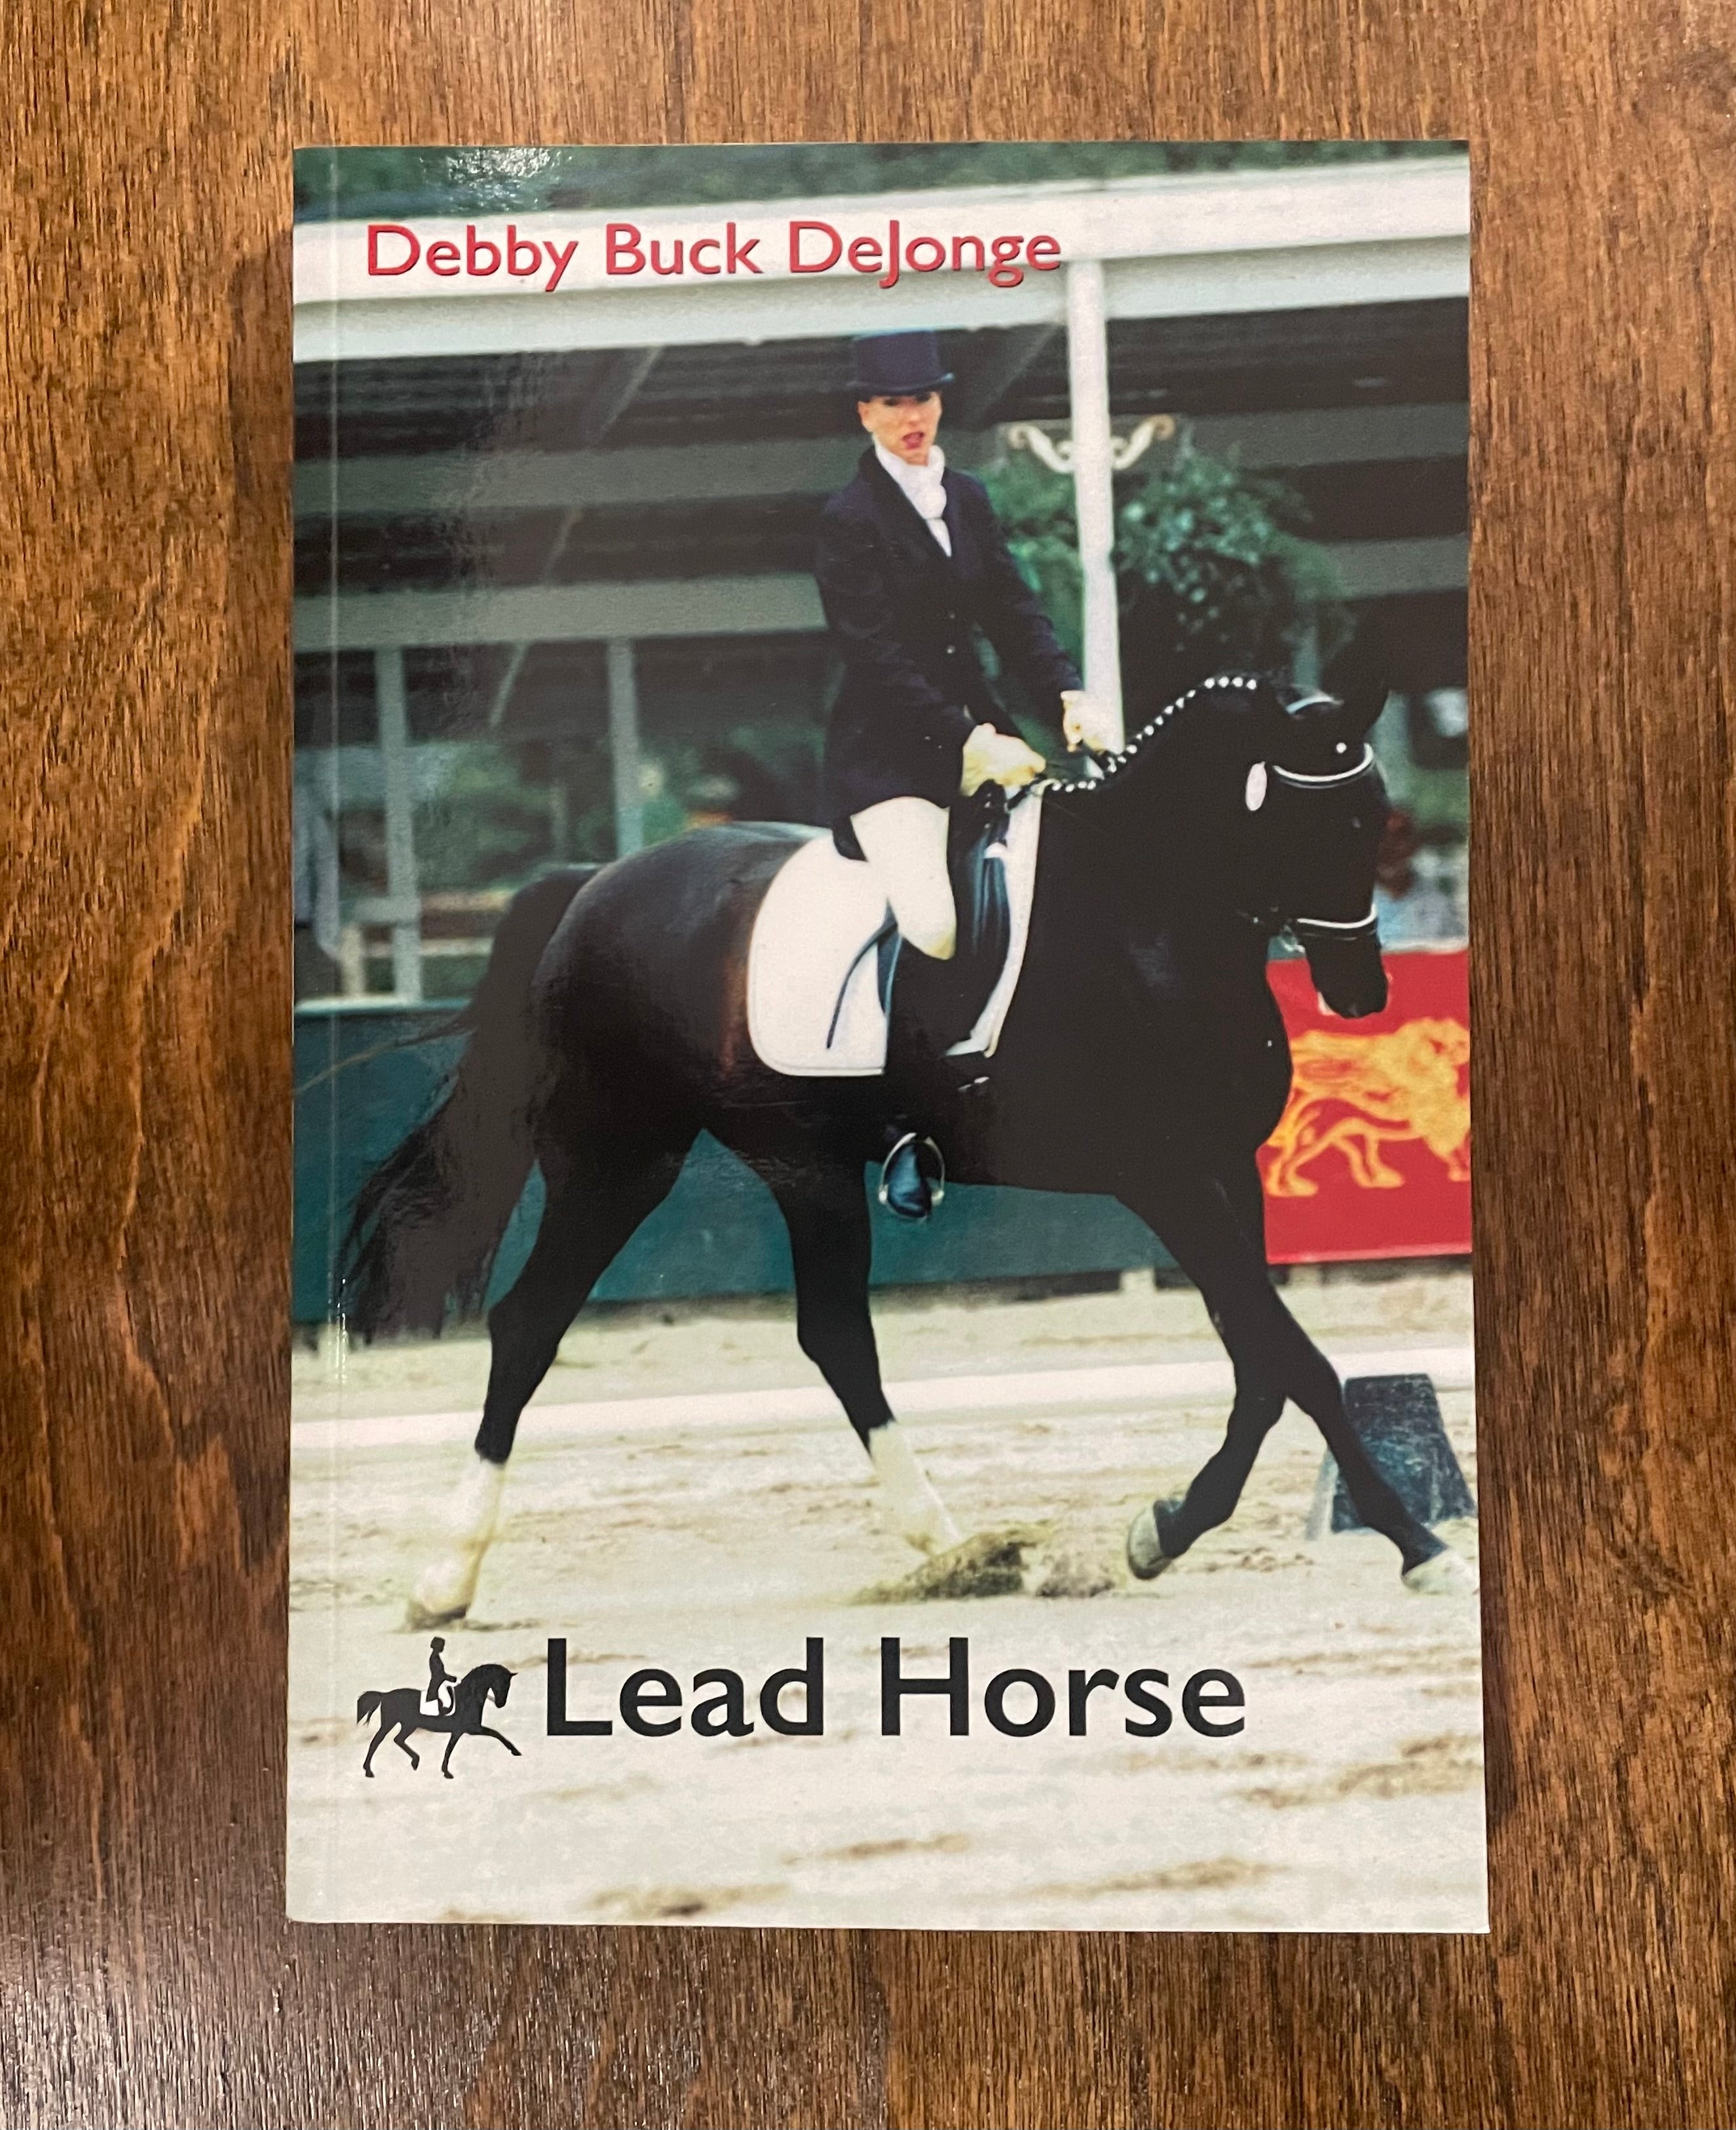 Lead Horse - Debby Buck DeJonge